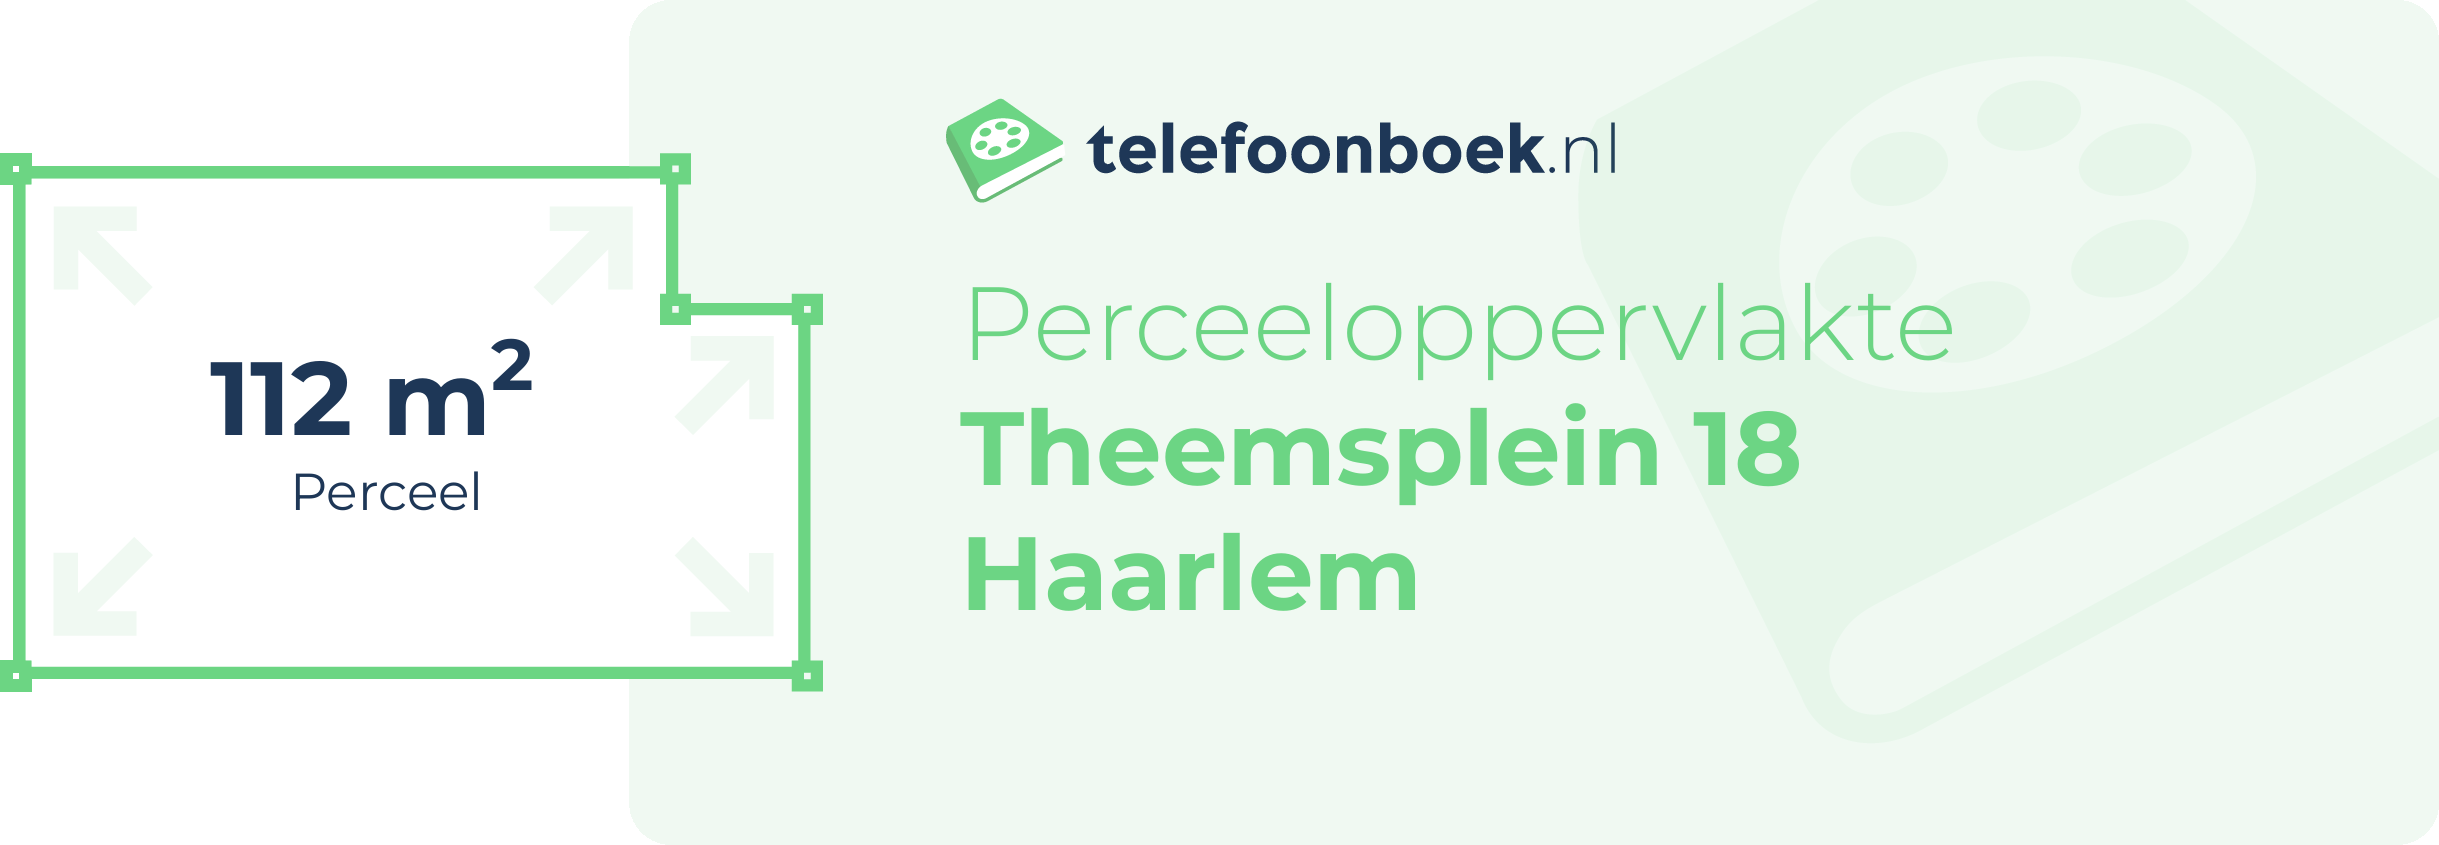 Perceeloppervlakte Theemsplein 18 Haarlem